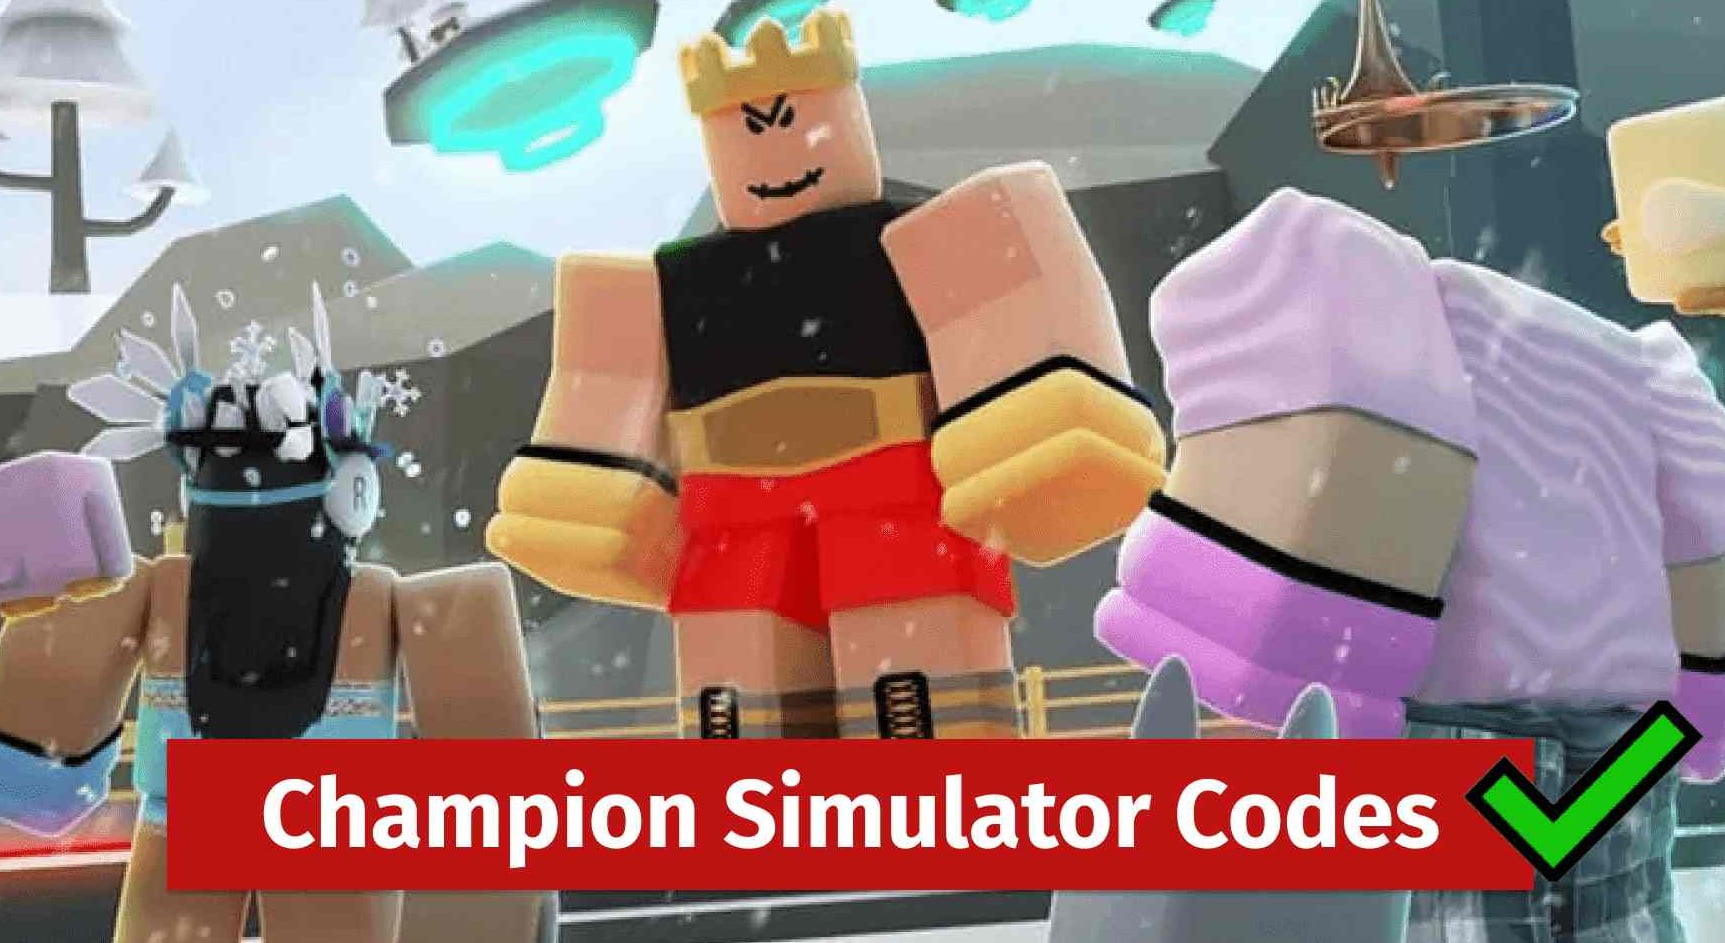 code-champion-simulator-m-i-nh-t-v-c-ch-nh-p-code-minh-vy